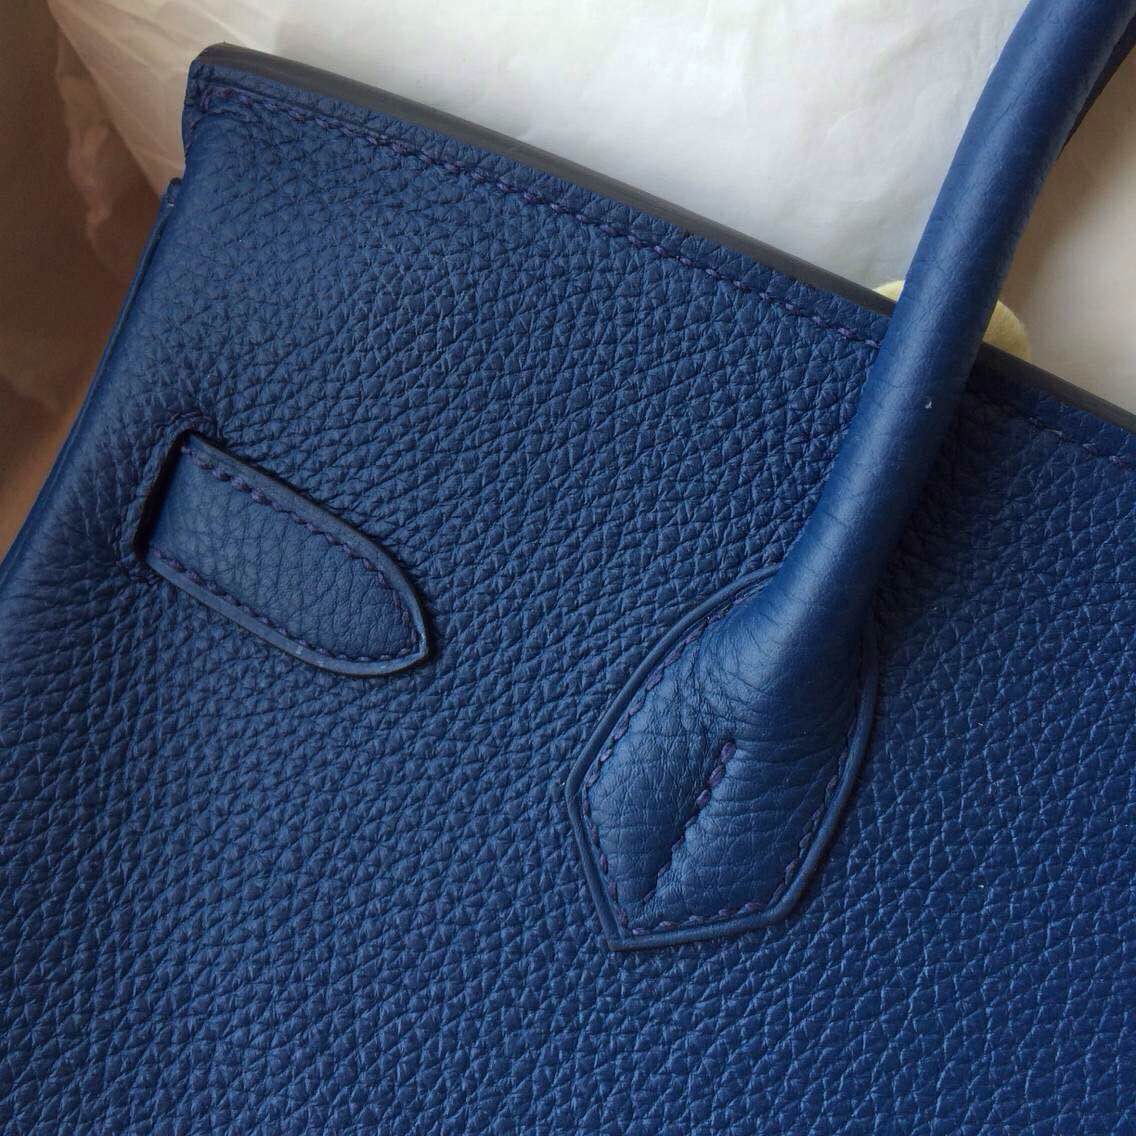 30cm Hermes Birkin Bag 7K Blue Saphir Togo Calfskin Leather Women’s ...